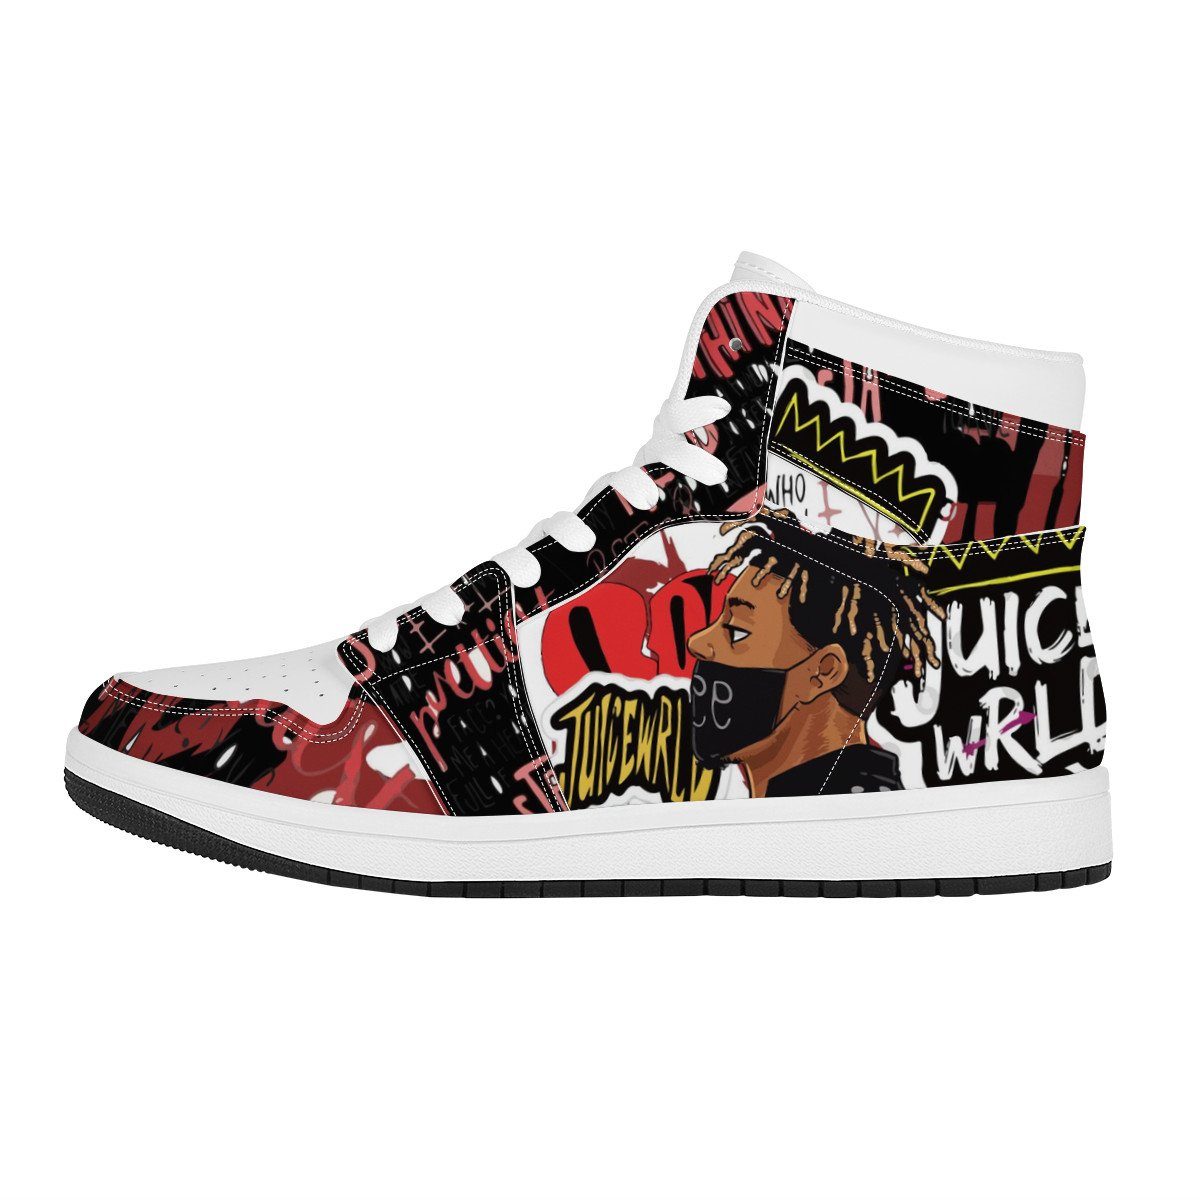 Juice Wrld High Top Sneaker - White